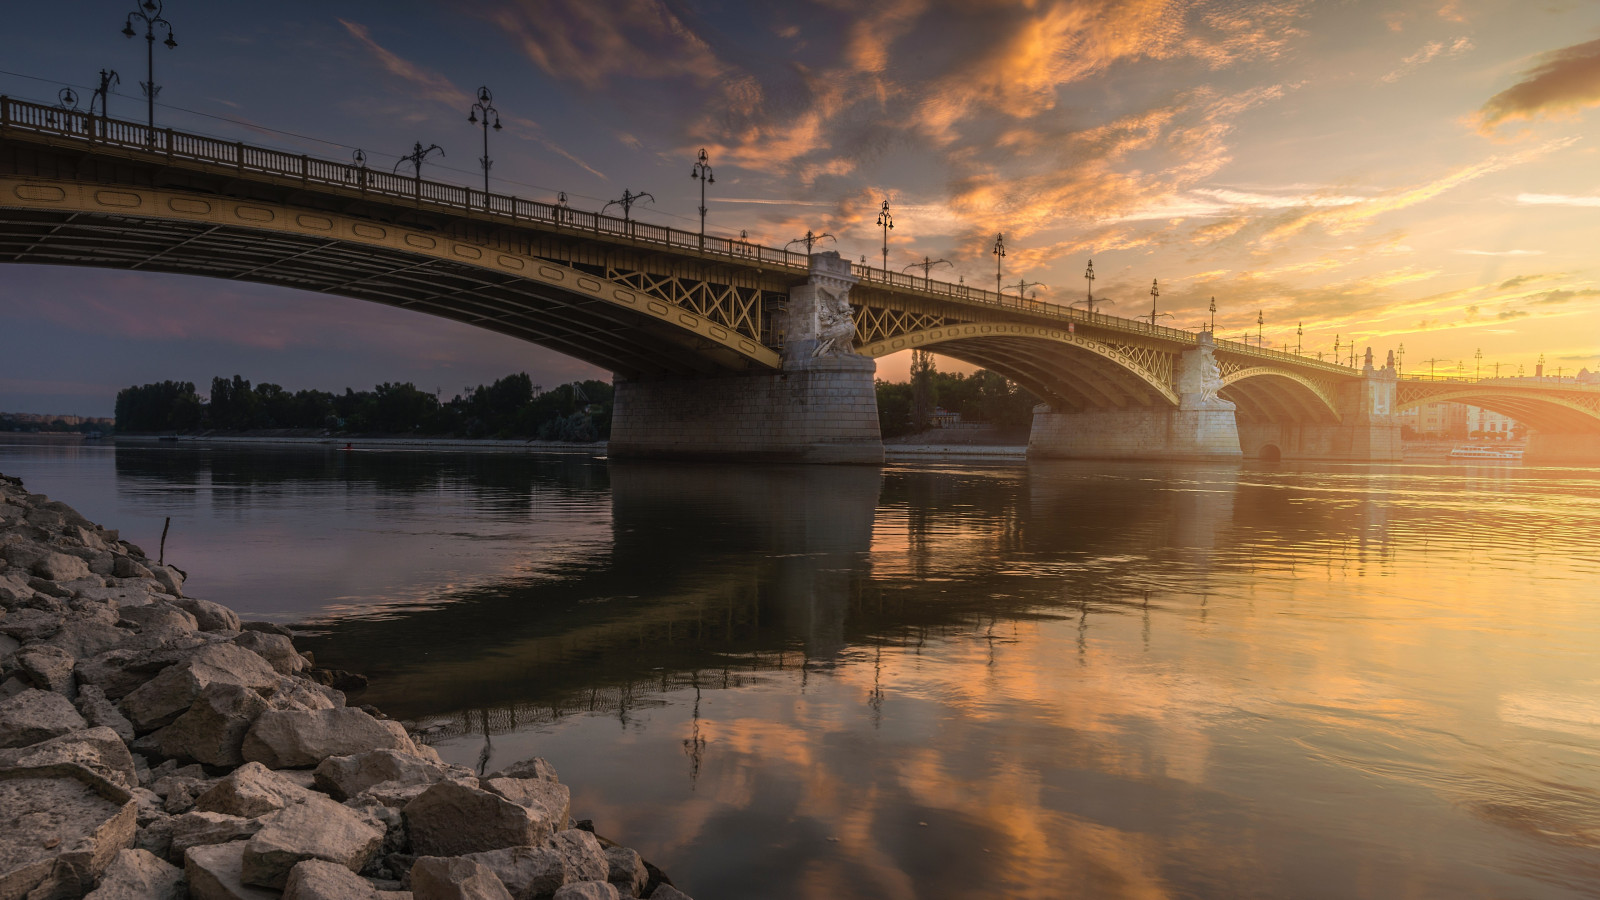 Download wallpaper: Margaret Bridge over Danube river 1600x900